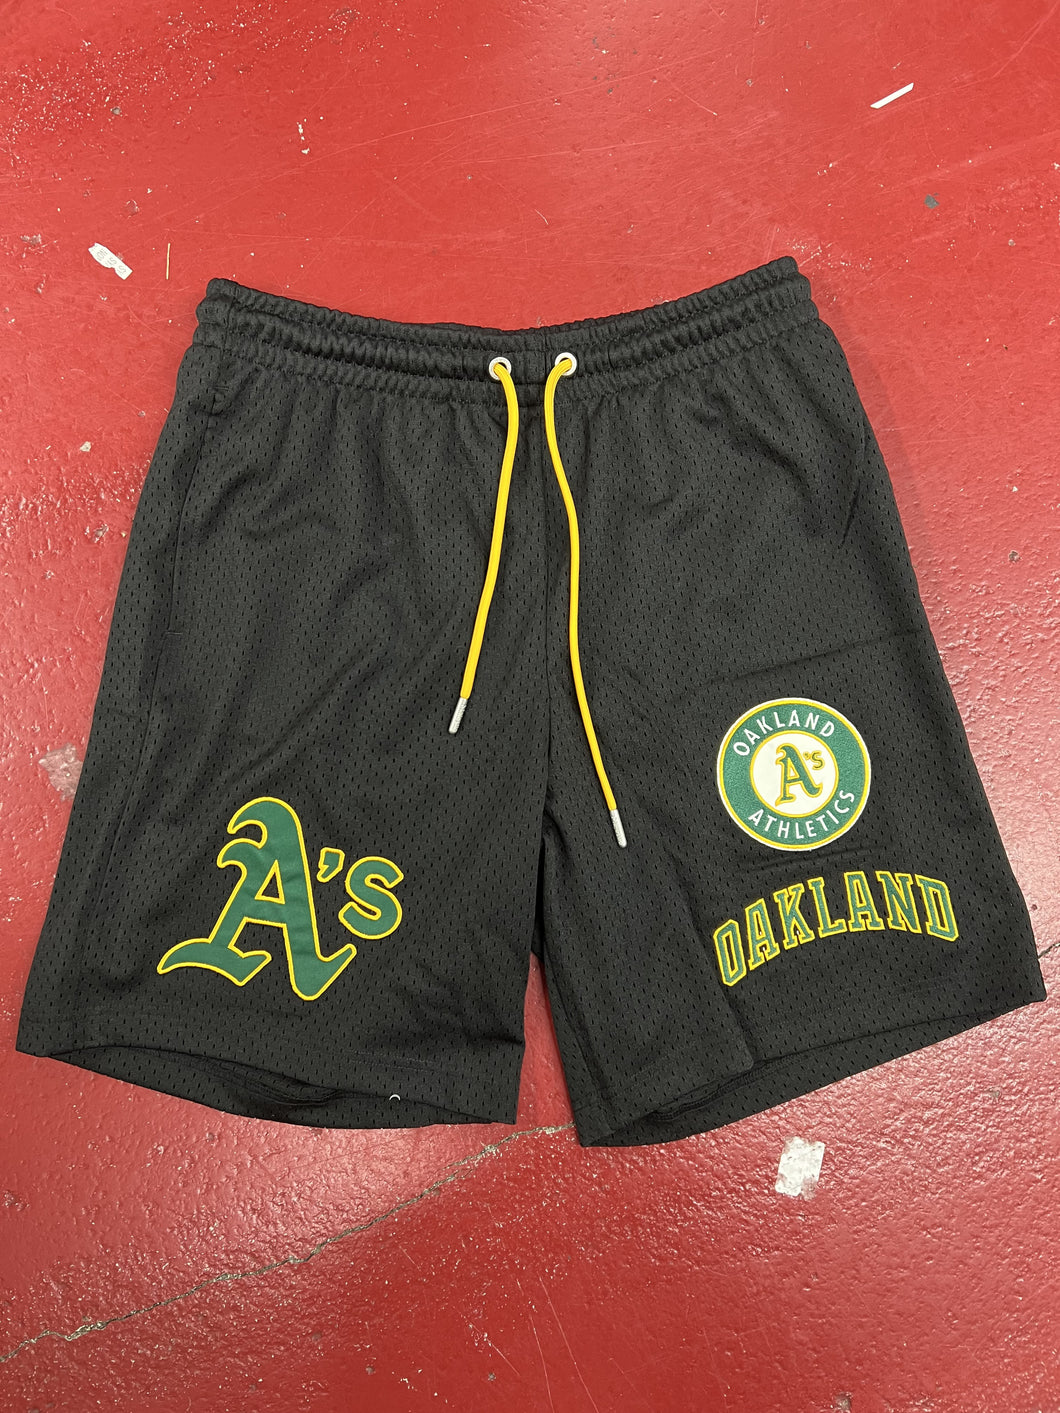 Oakland Basketball Shorts